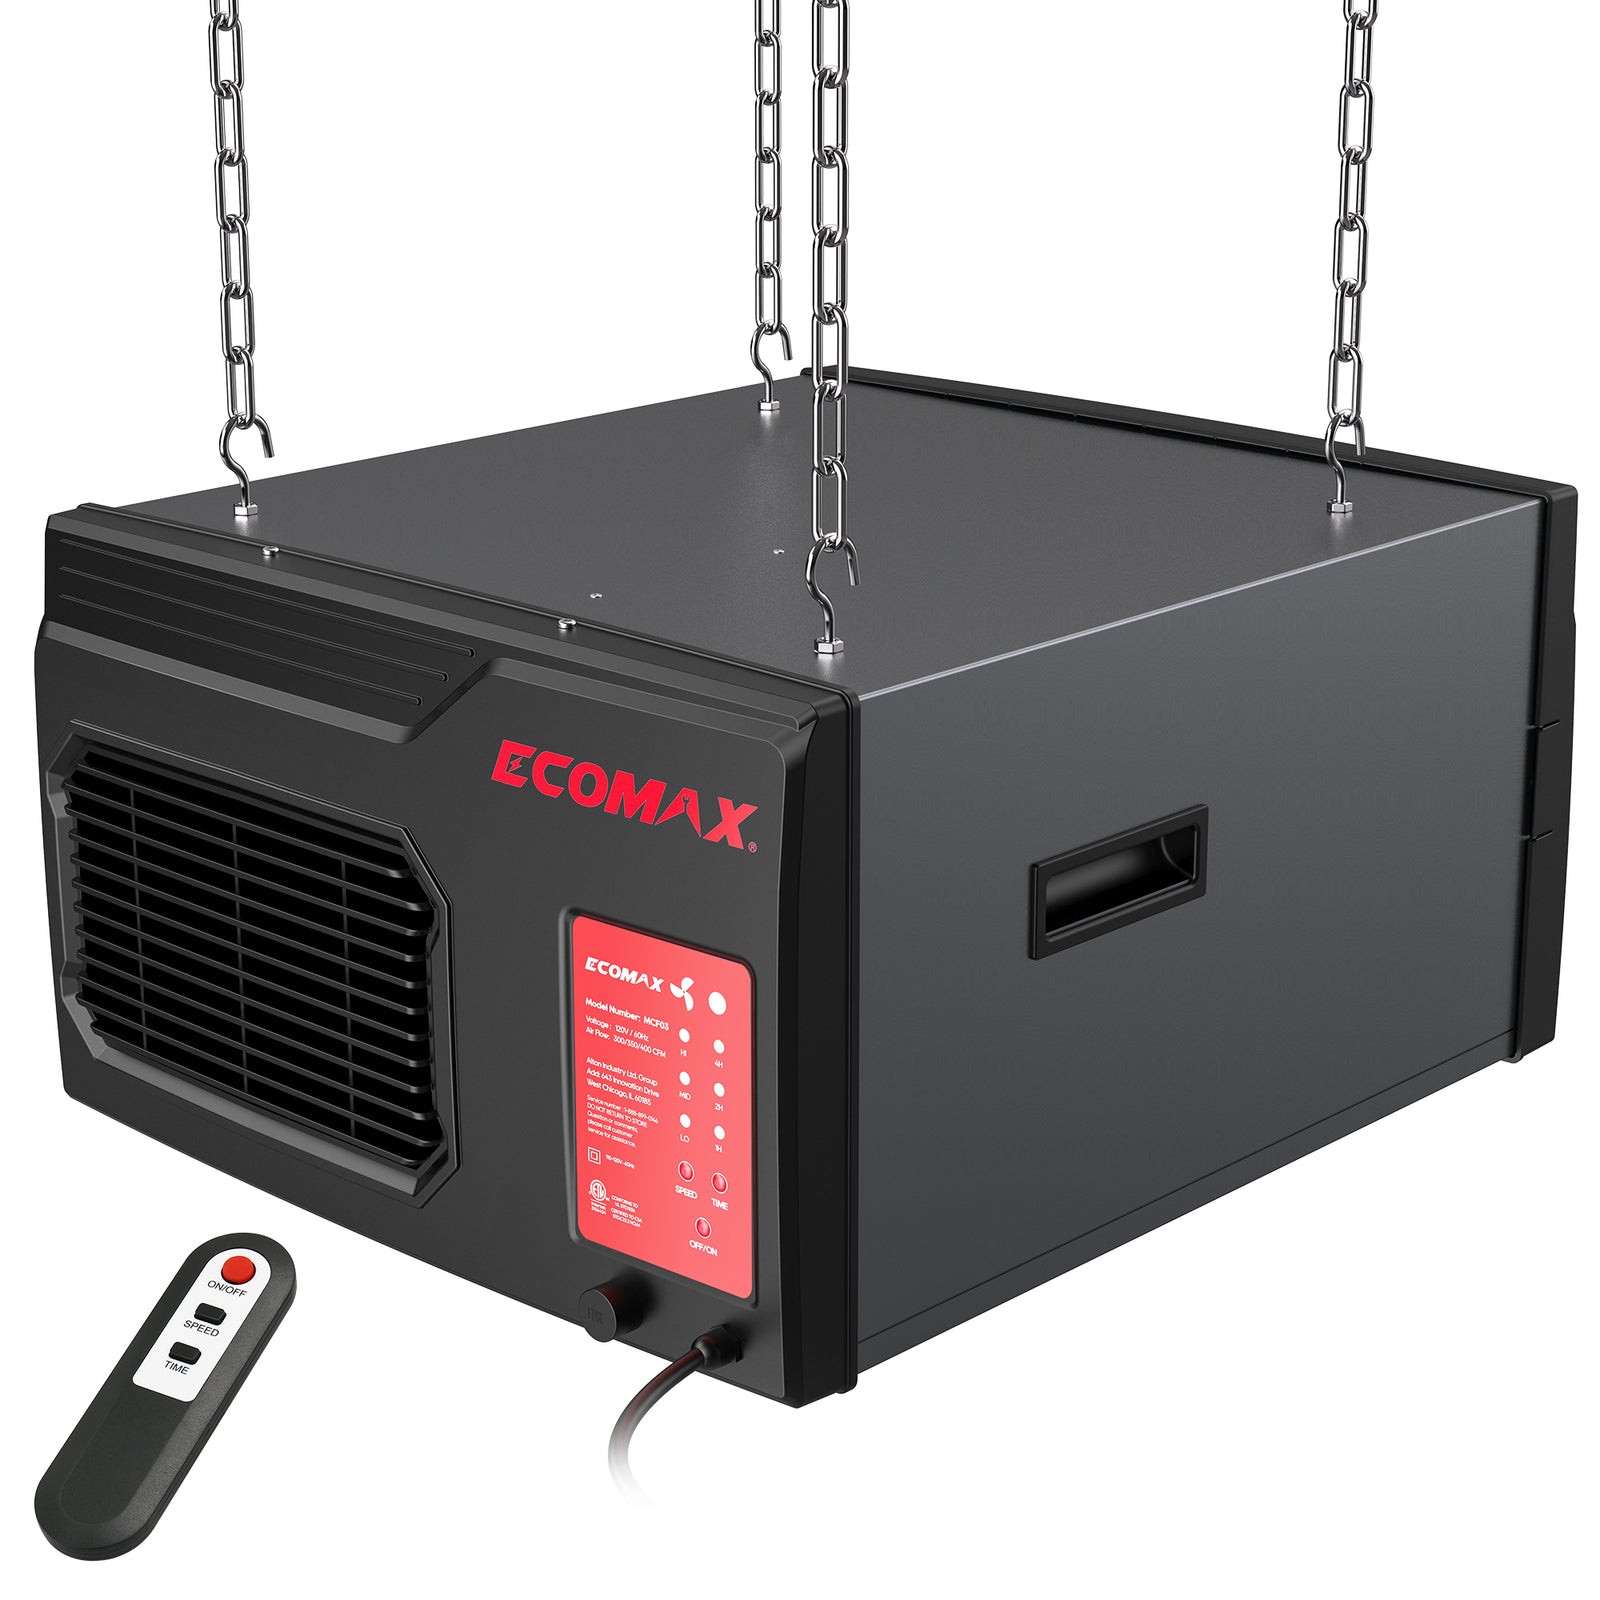 ECOMAX 3/8 in. x 50 ft Air Hose Reel, Auto Rewind Retractable Air